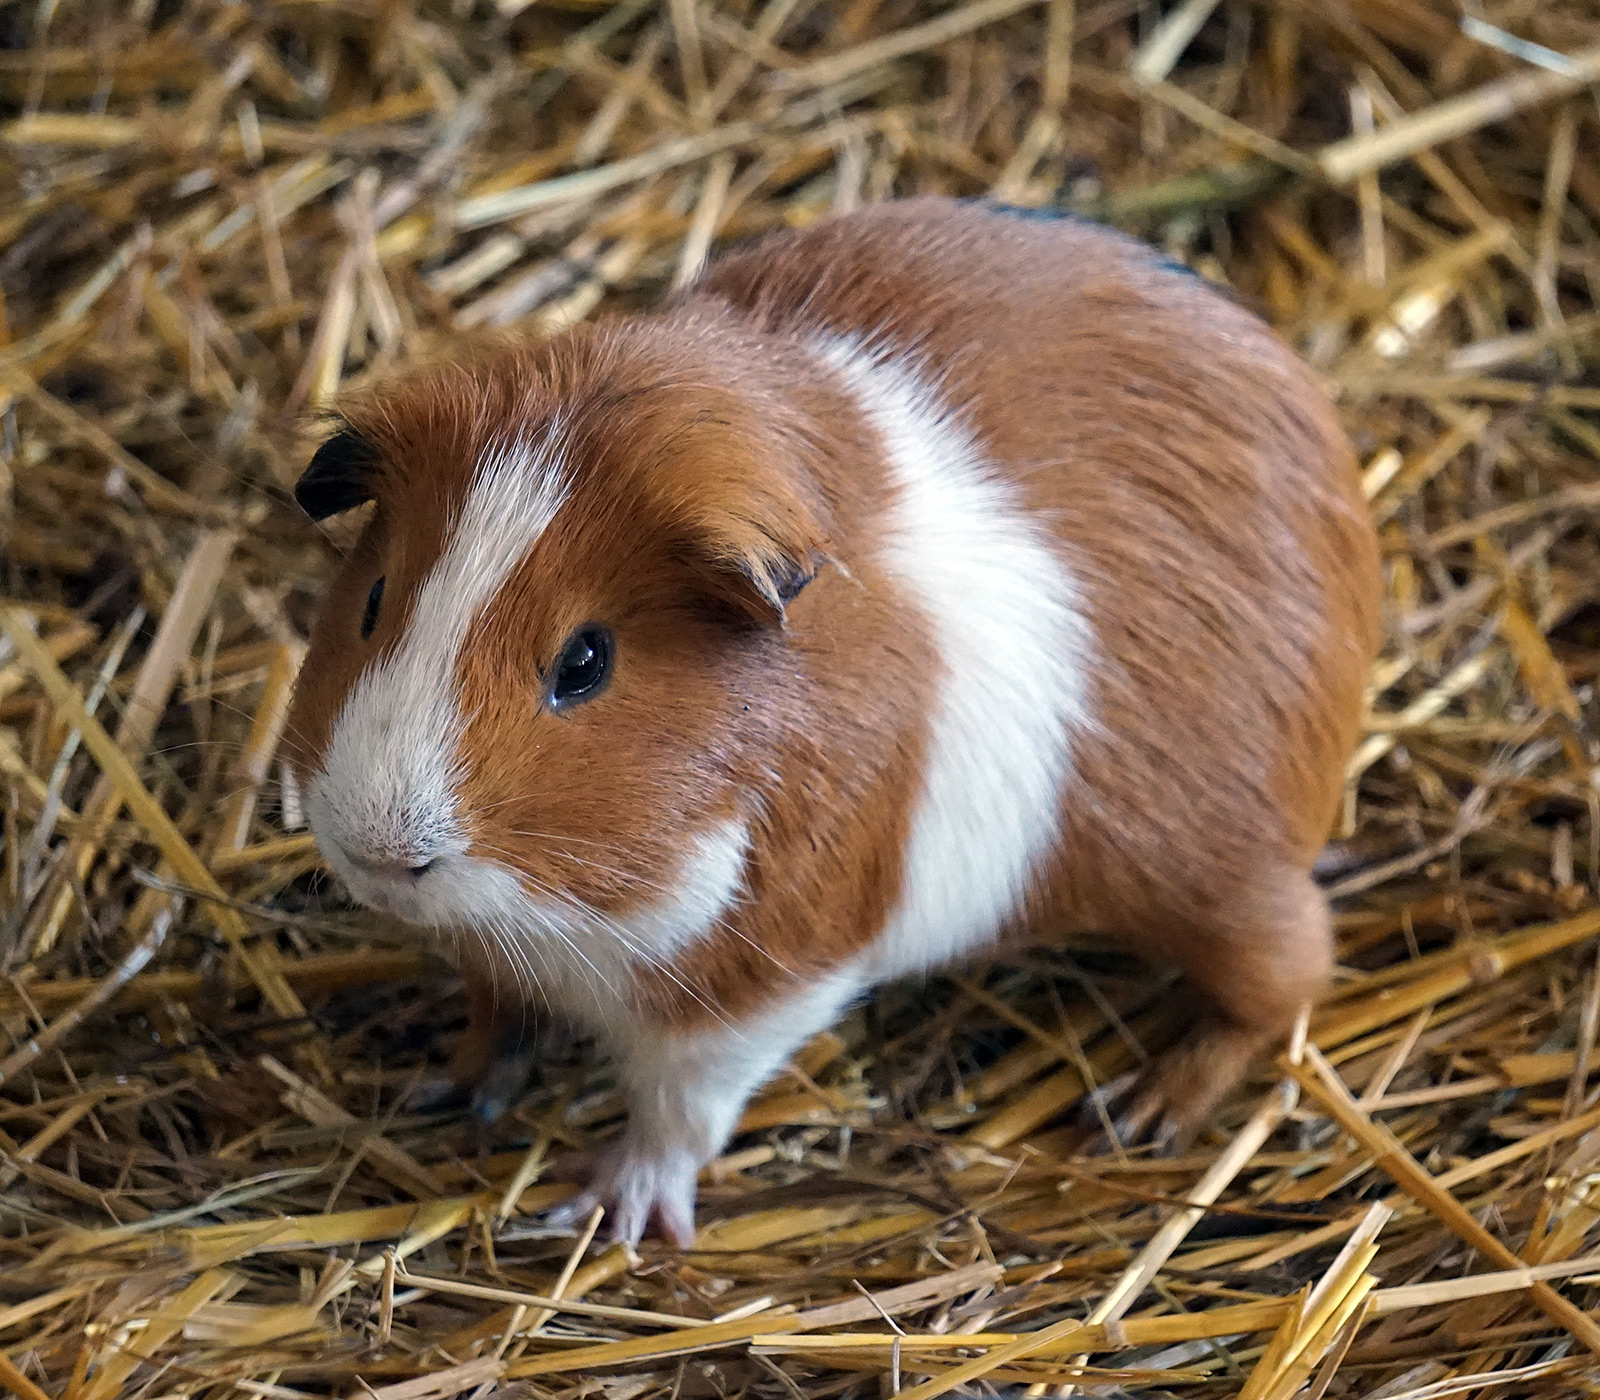 guinea pig and barley straw